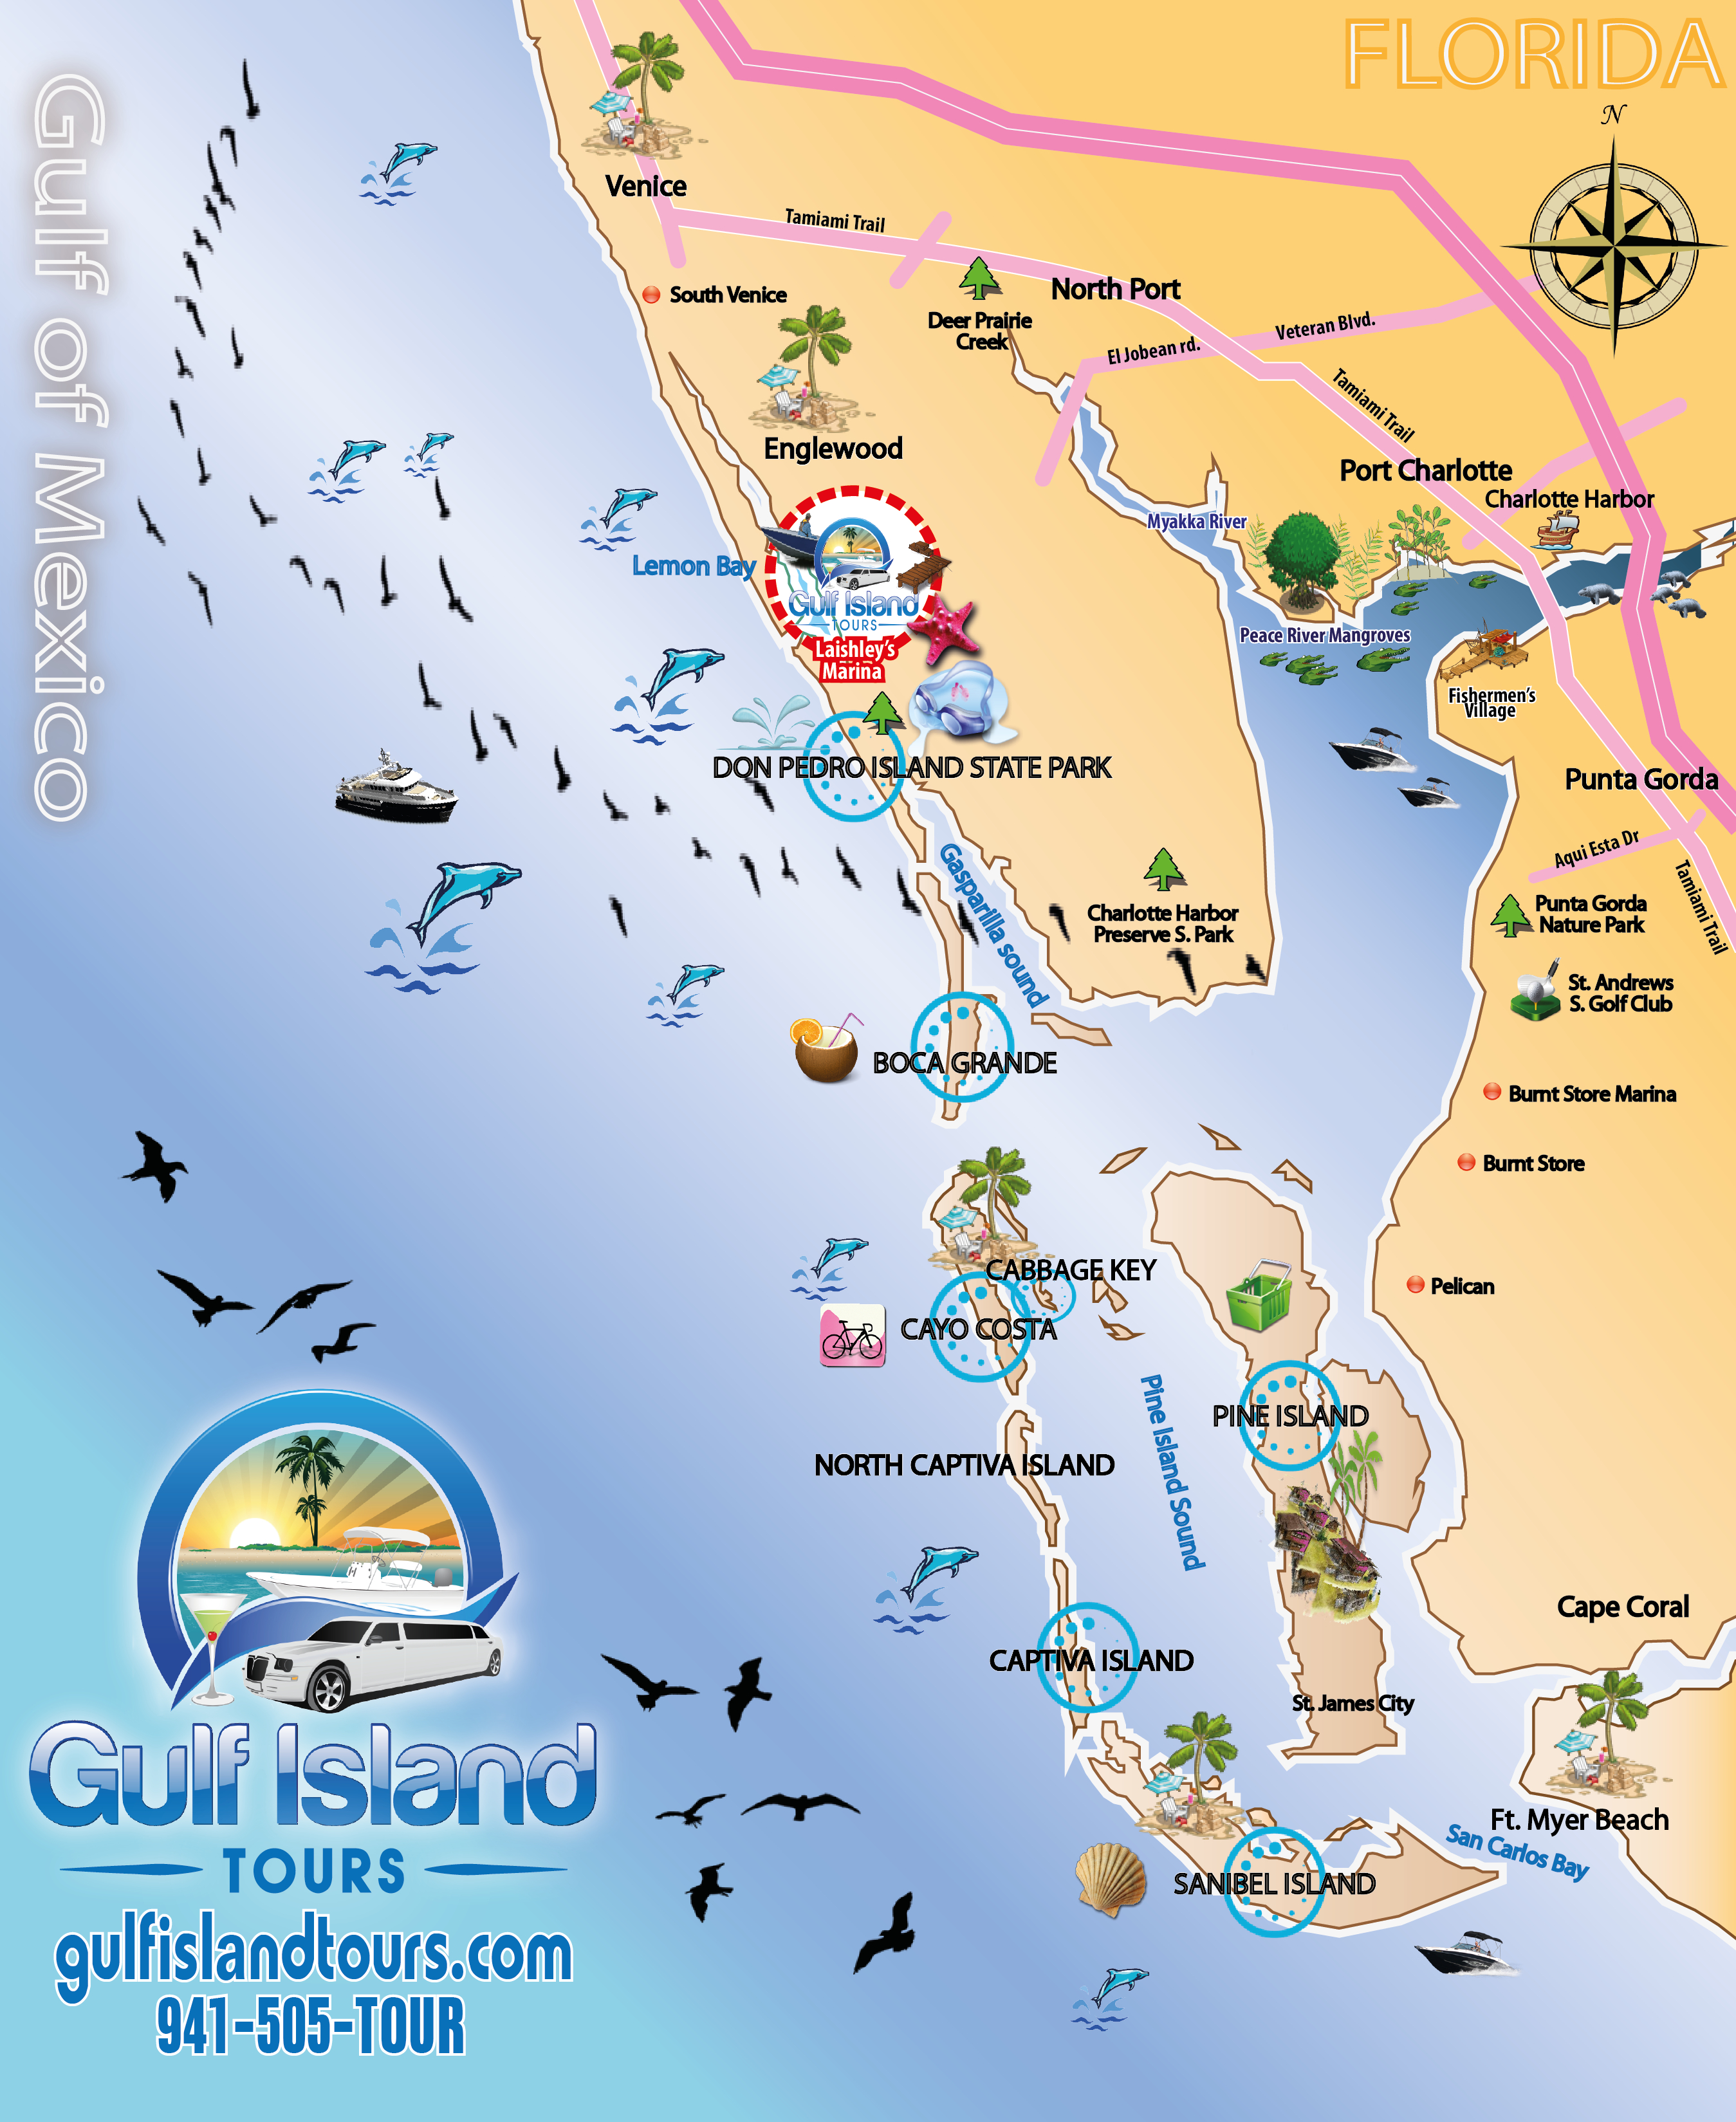 Boat Tours Englewood Fl - 941-505-8687 - Gulf Island Tours Offers - Map Of Southwest Florida Gulf Coast